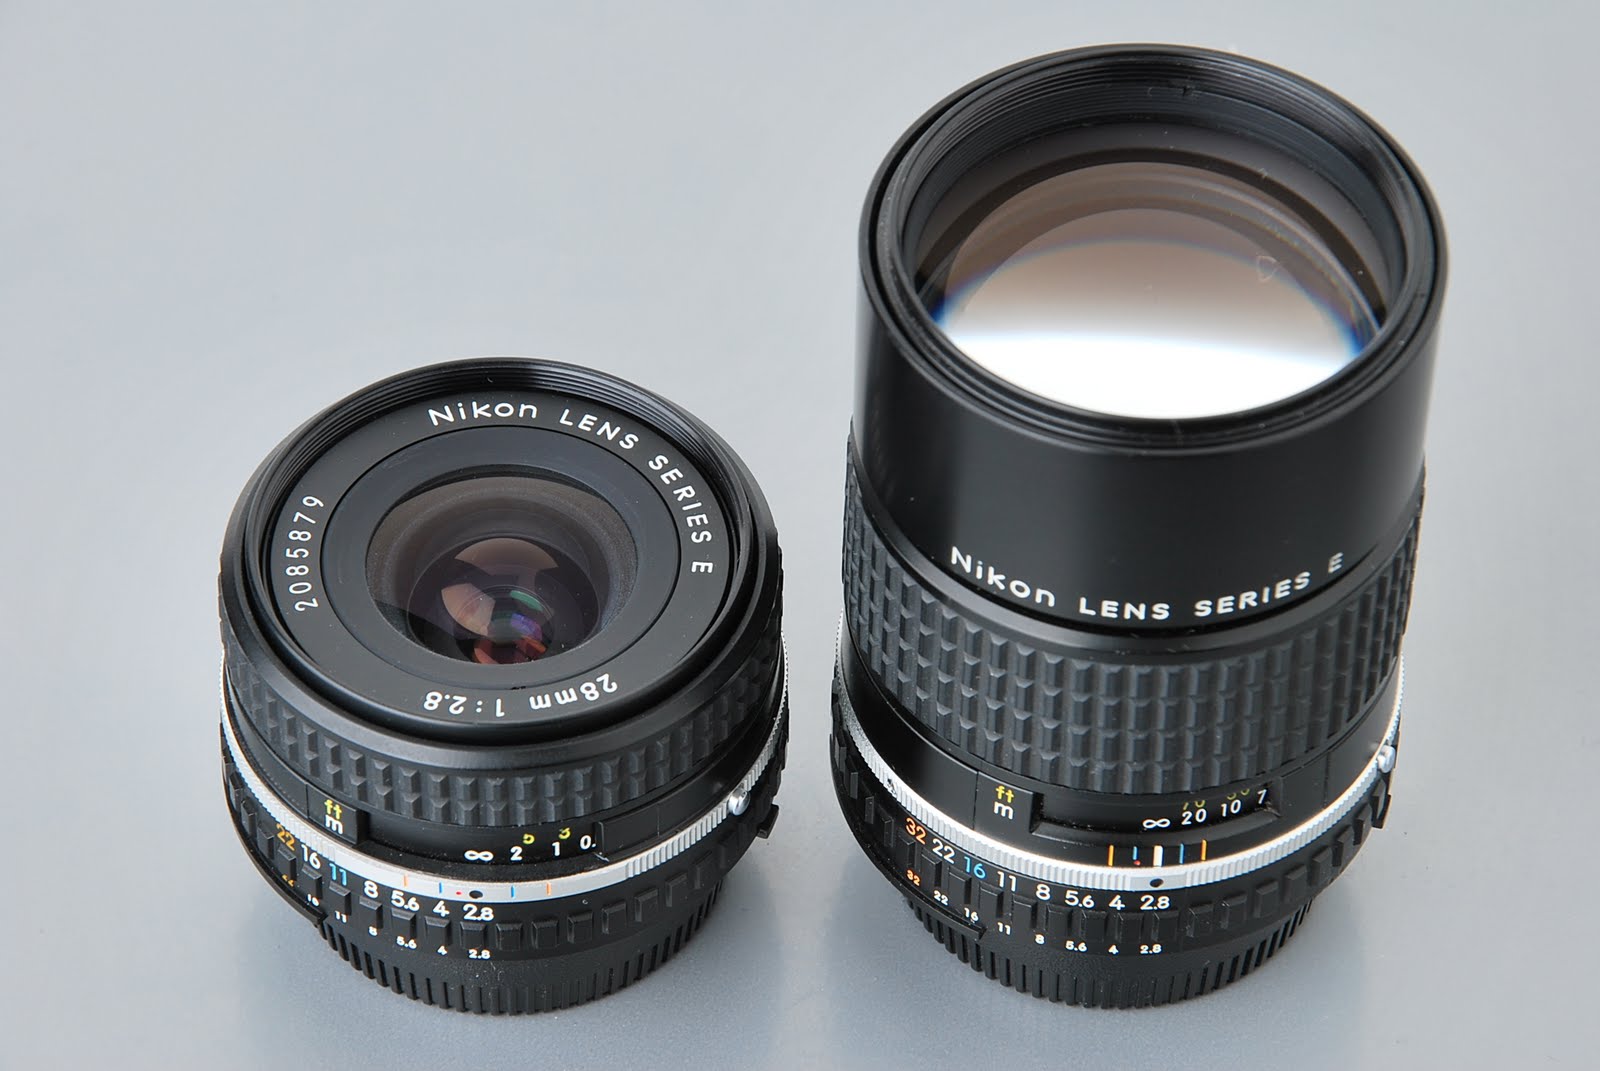 Nikon Lens Series E 100/2.8